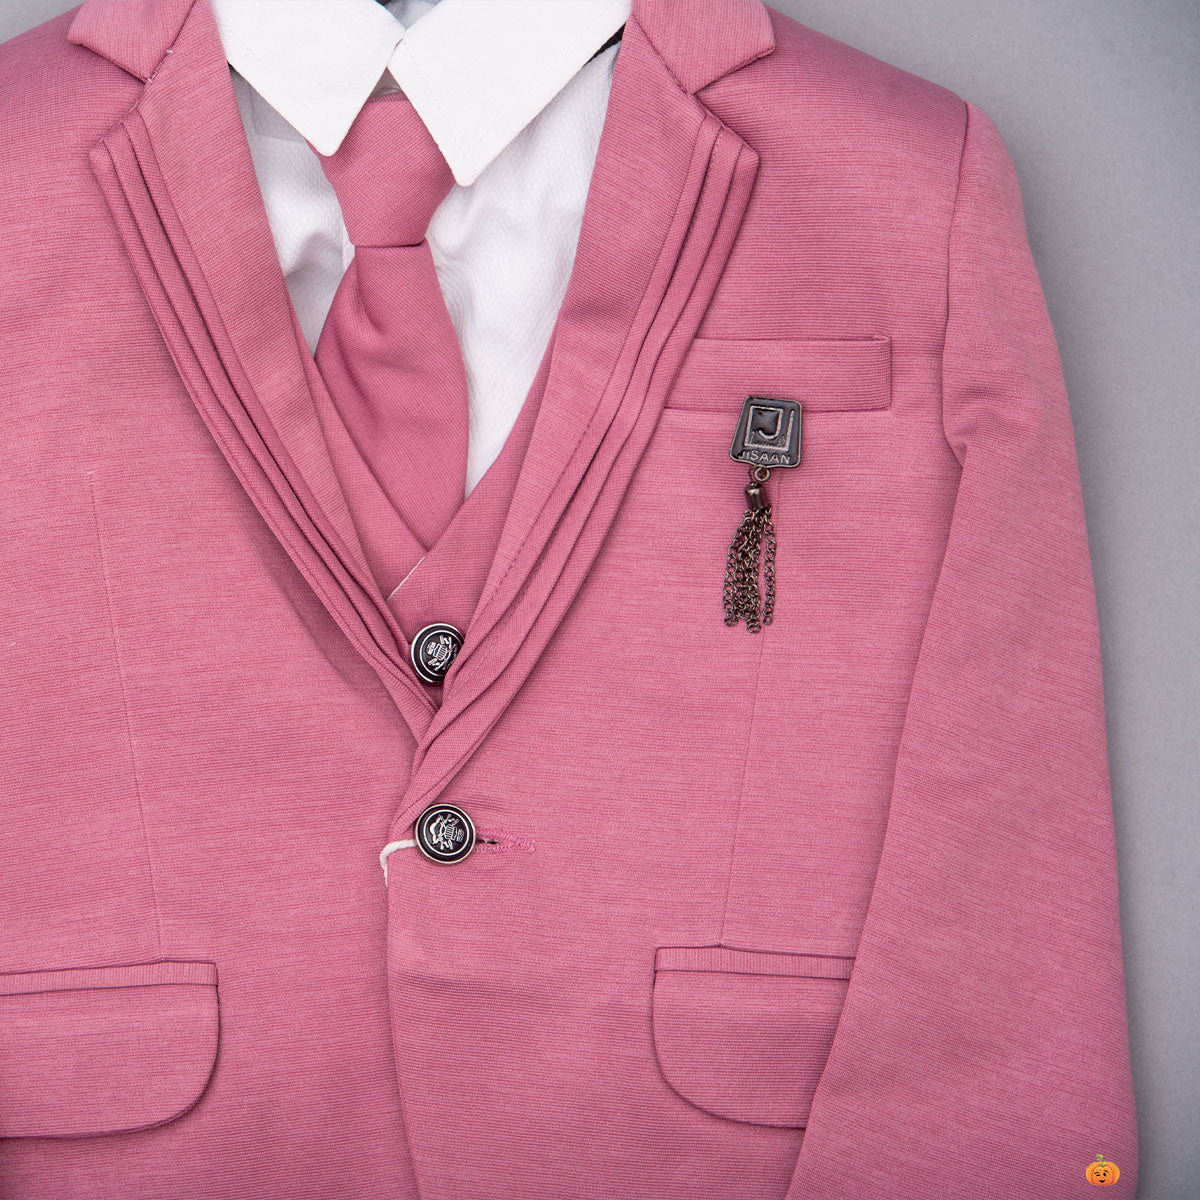 Le GRAND STYLIST: Recent purchase: a pink suit jacket